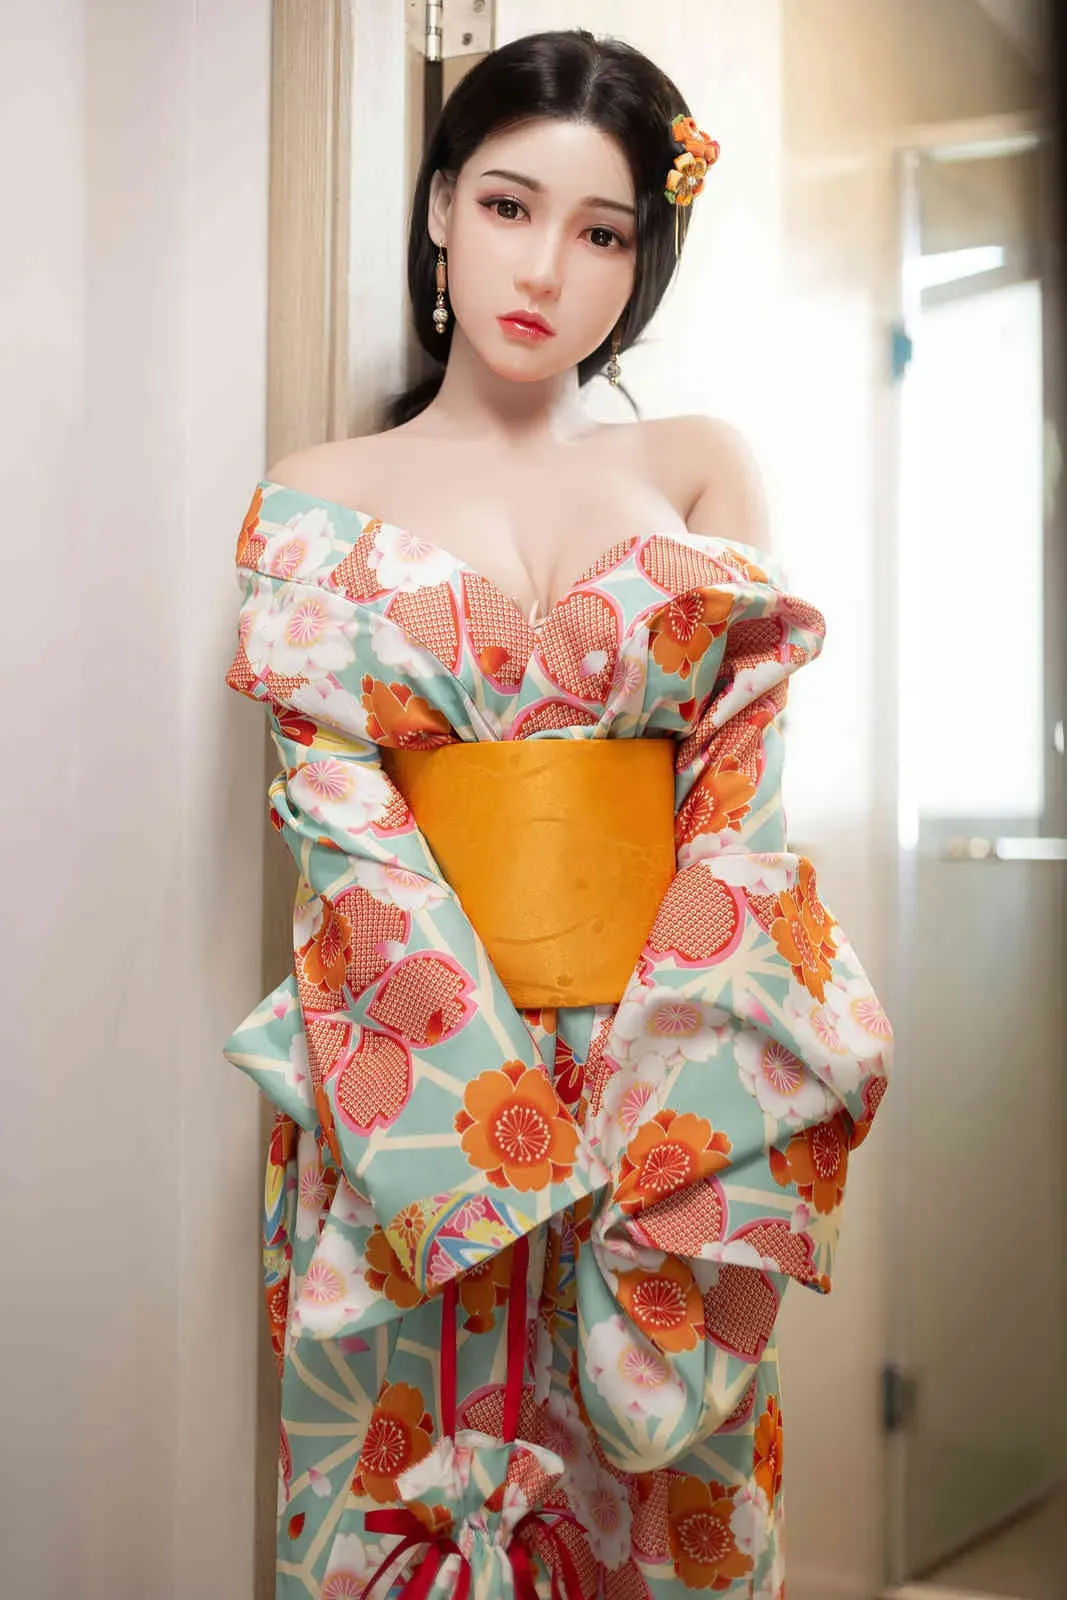 2023 New Full size Silicone Big Breast SexDolls Oral Anal Vagina Japanese Skeleton Adult Mini Lifelike Anime Love Dolls for Men